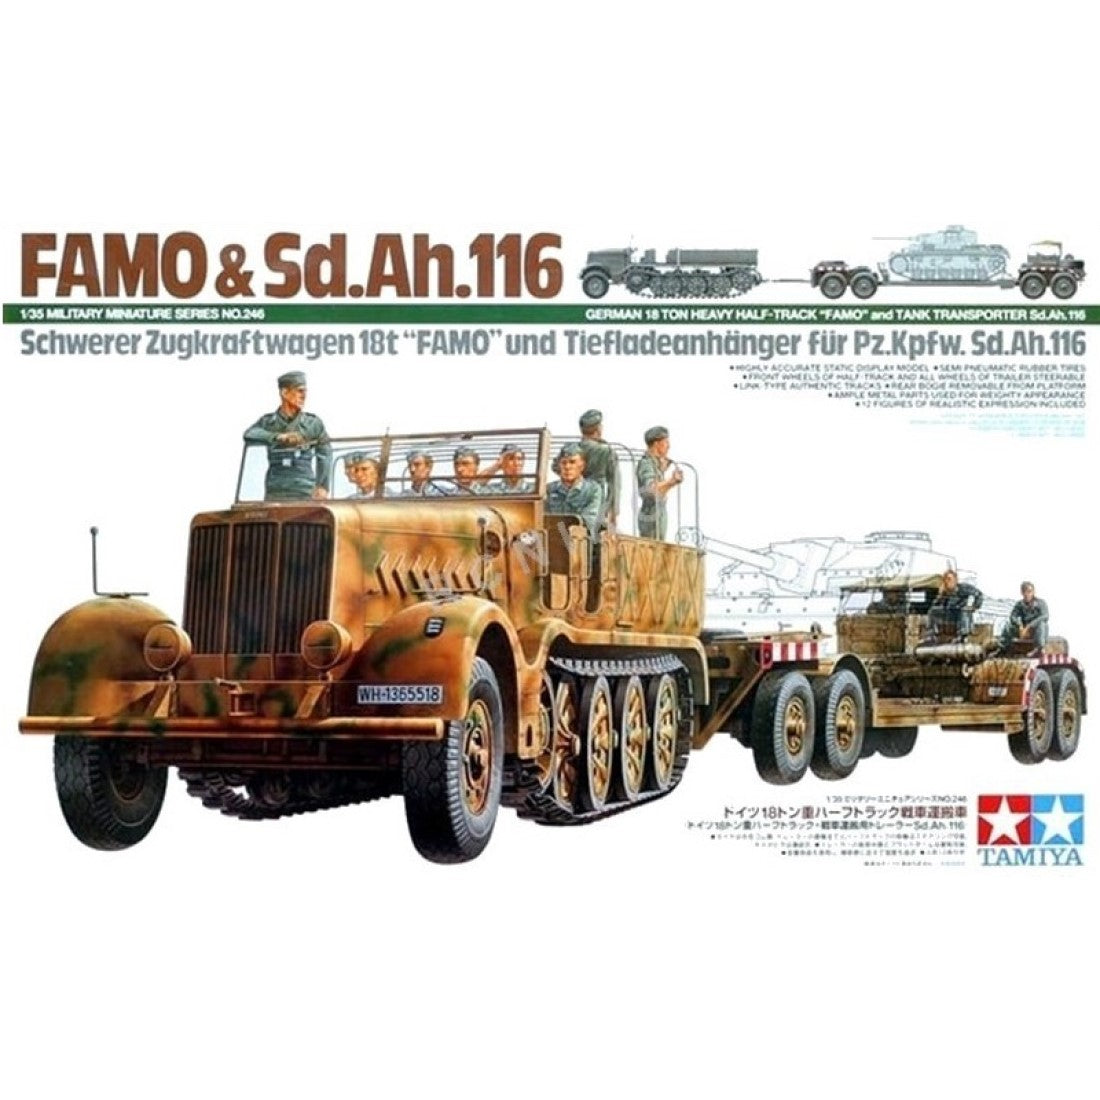 Tamiya 1/35 German Famo and Tank Transport Sd.Ah.116 35246